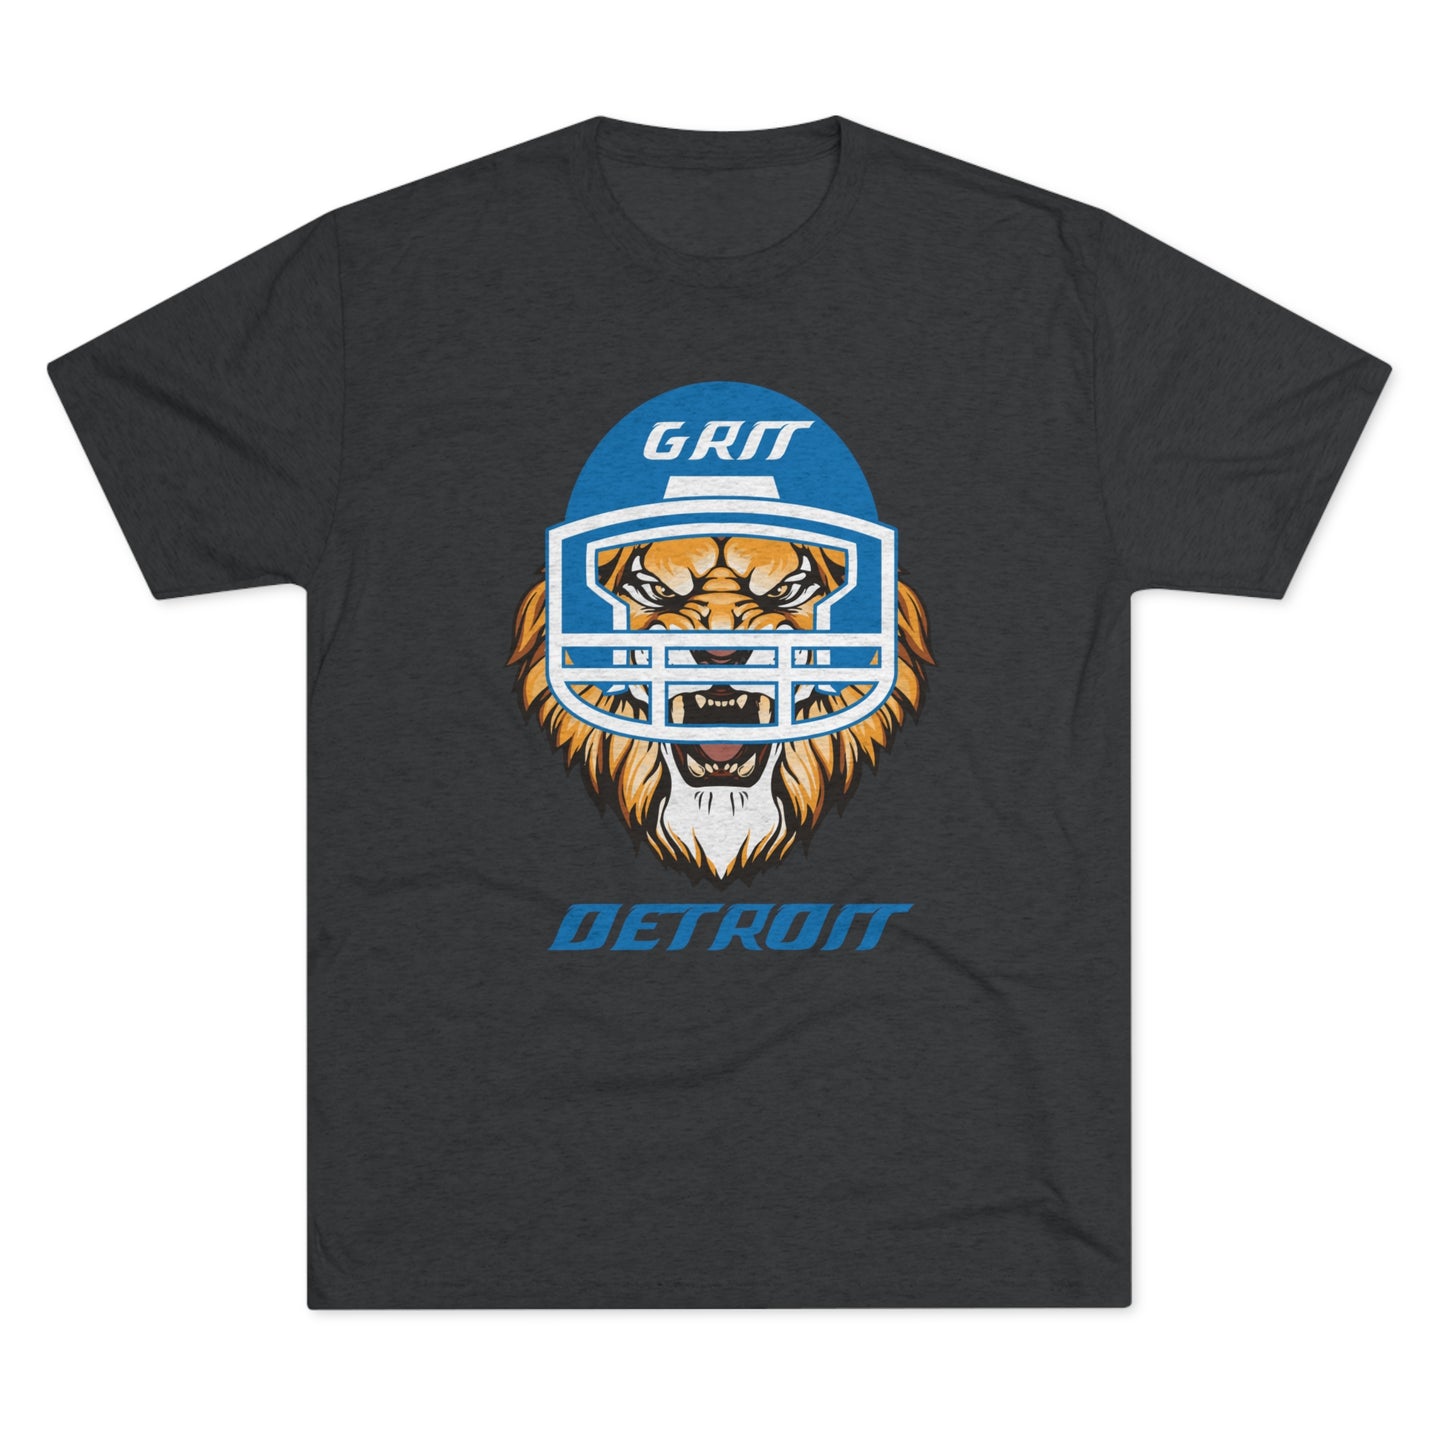 Detroit Lions Grit Football Tshirt